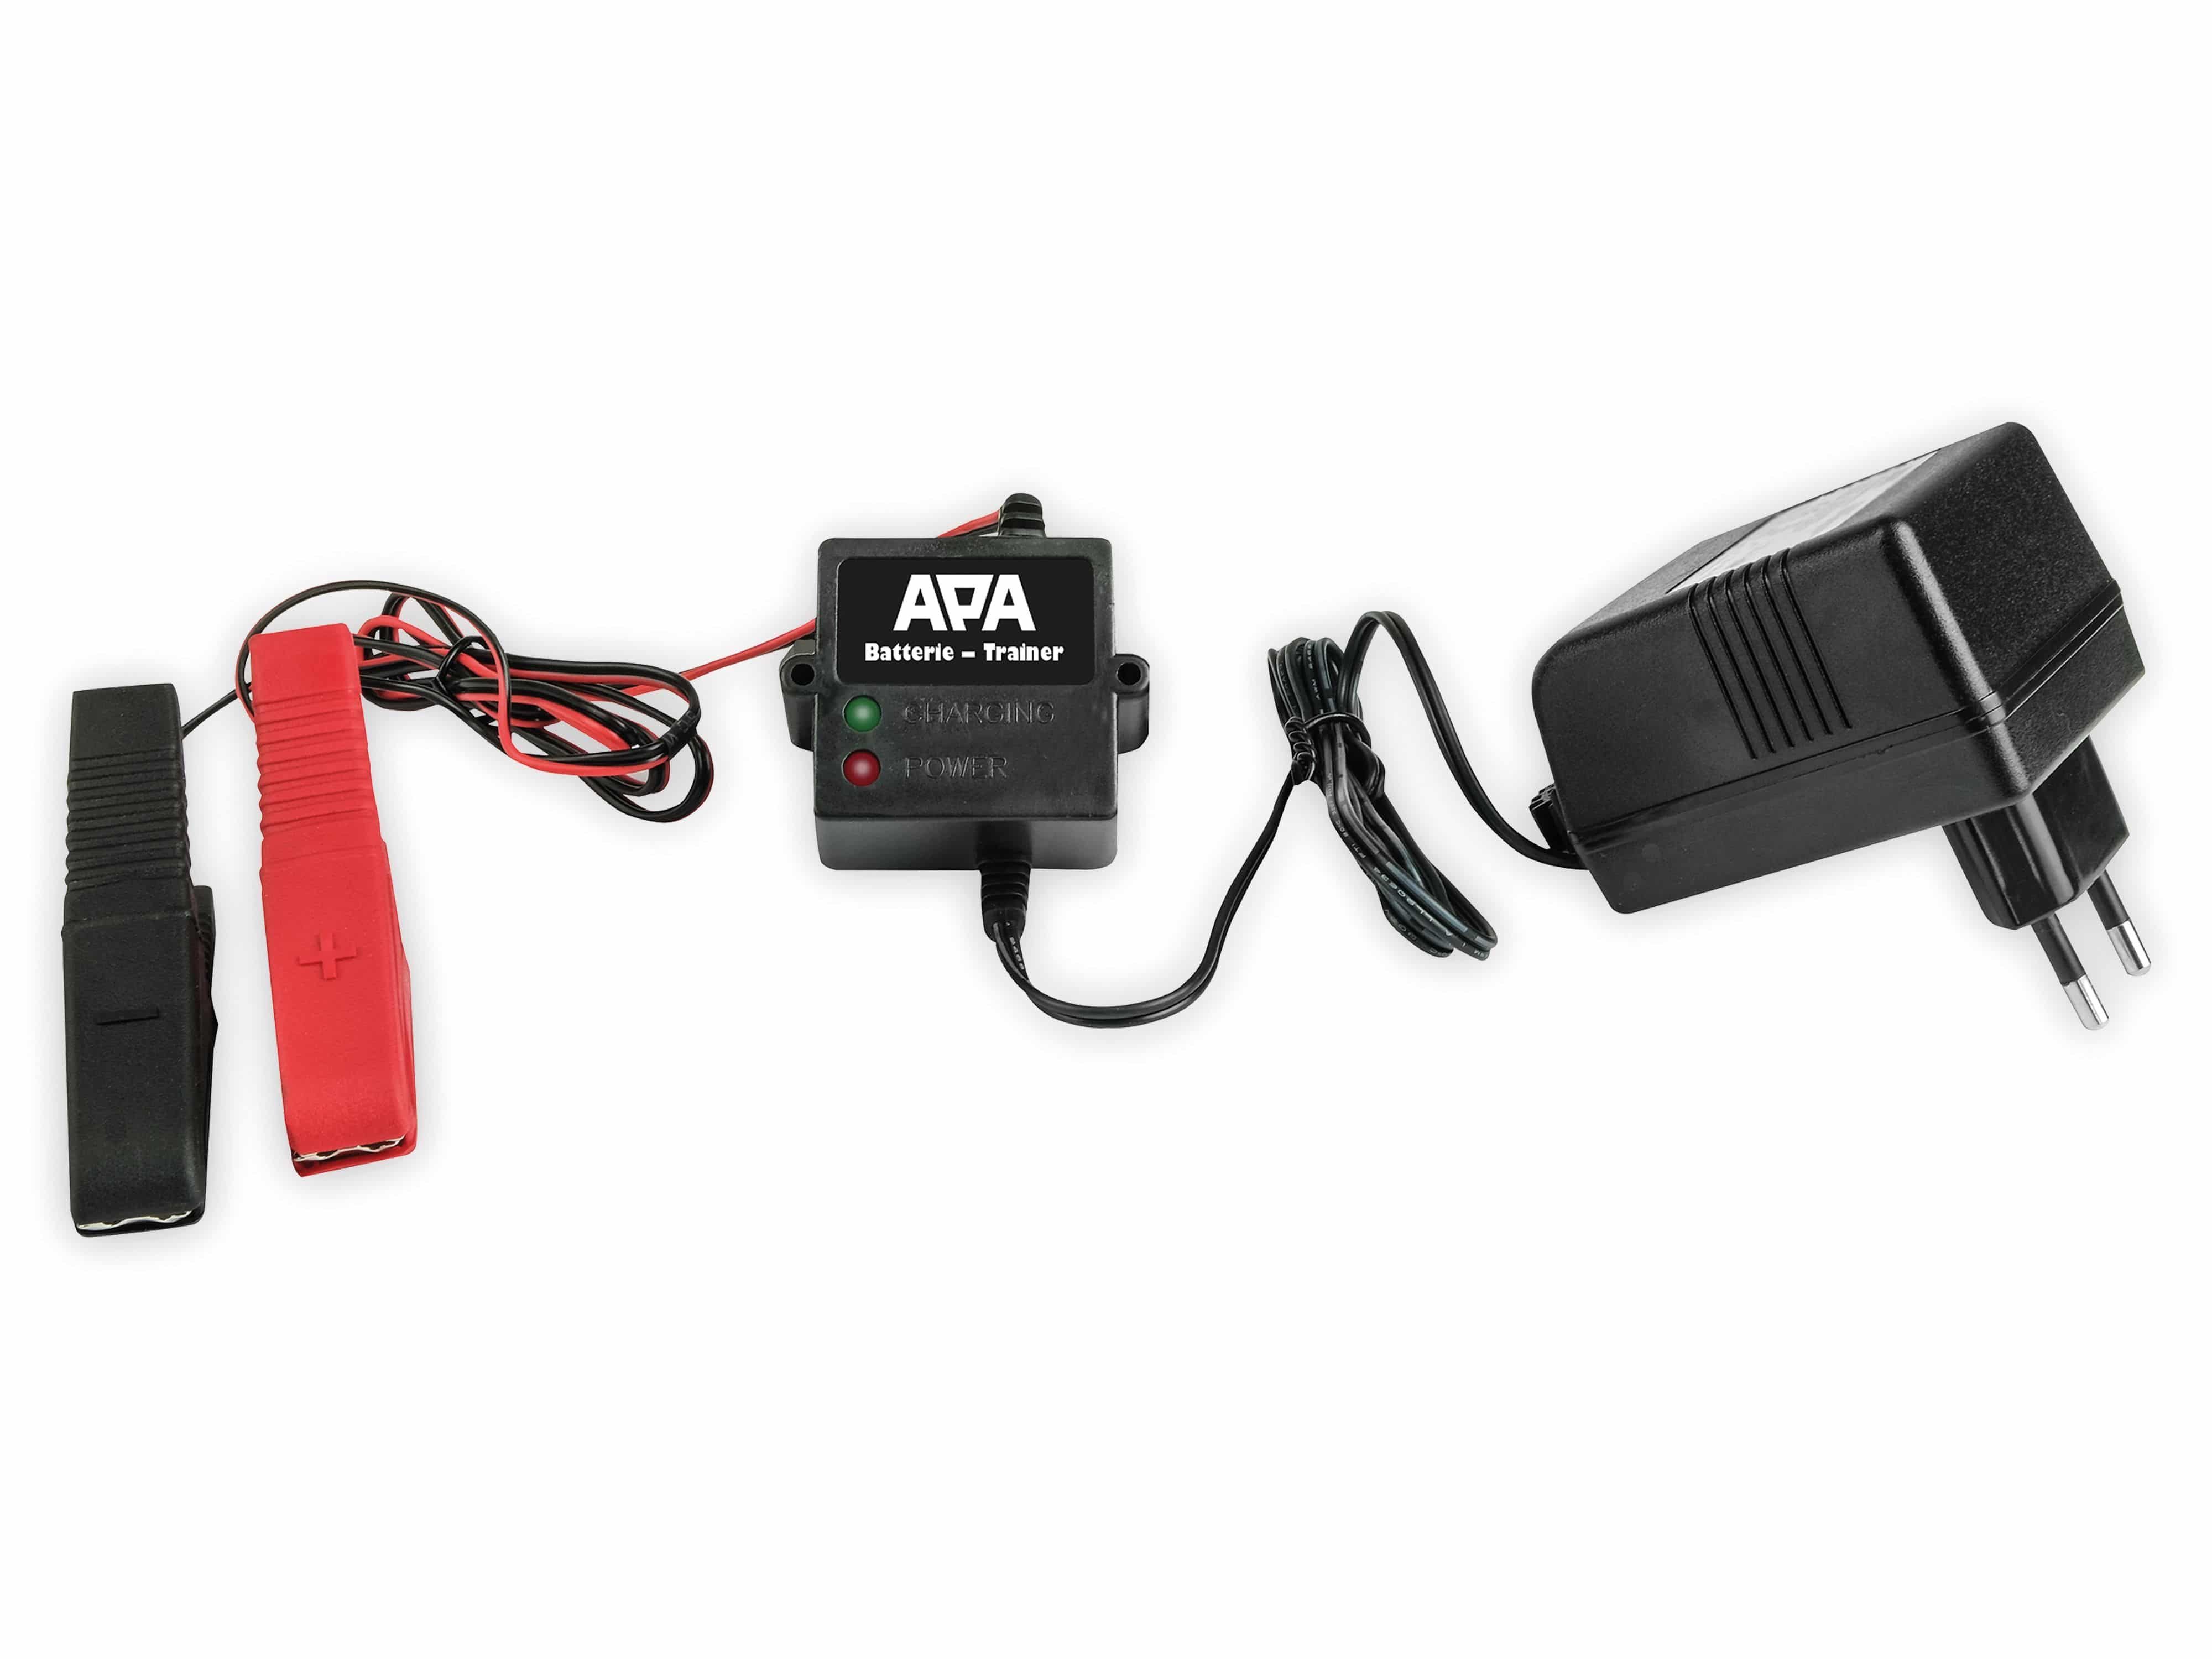 APA APA Batterietrainer 16506, 12V, 500mA Batterie